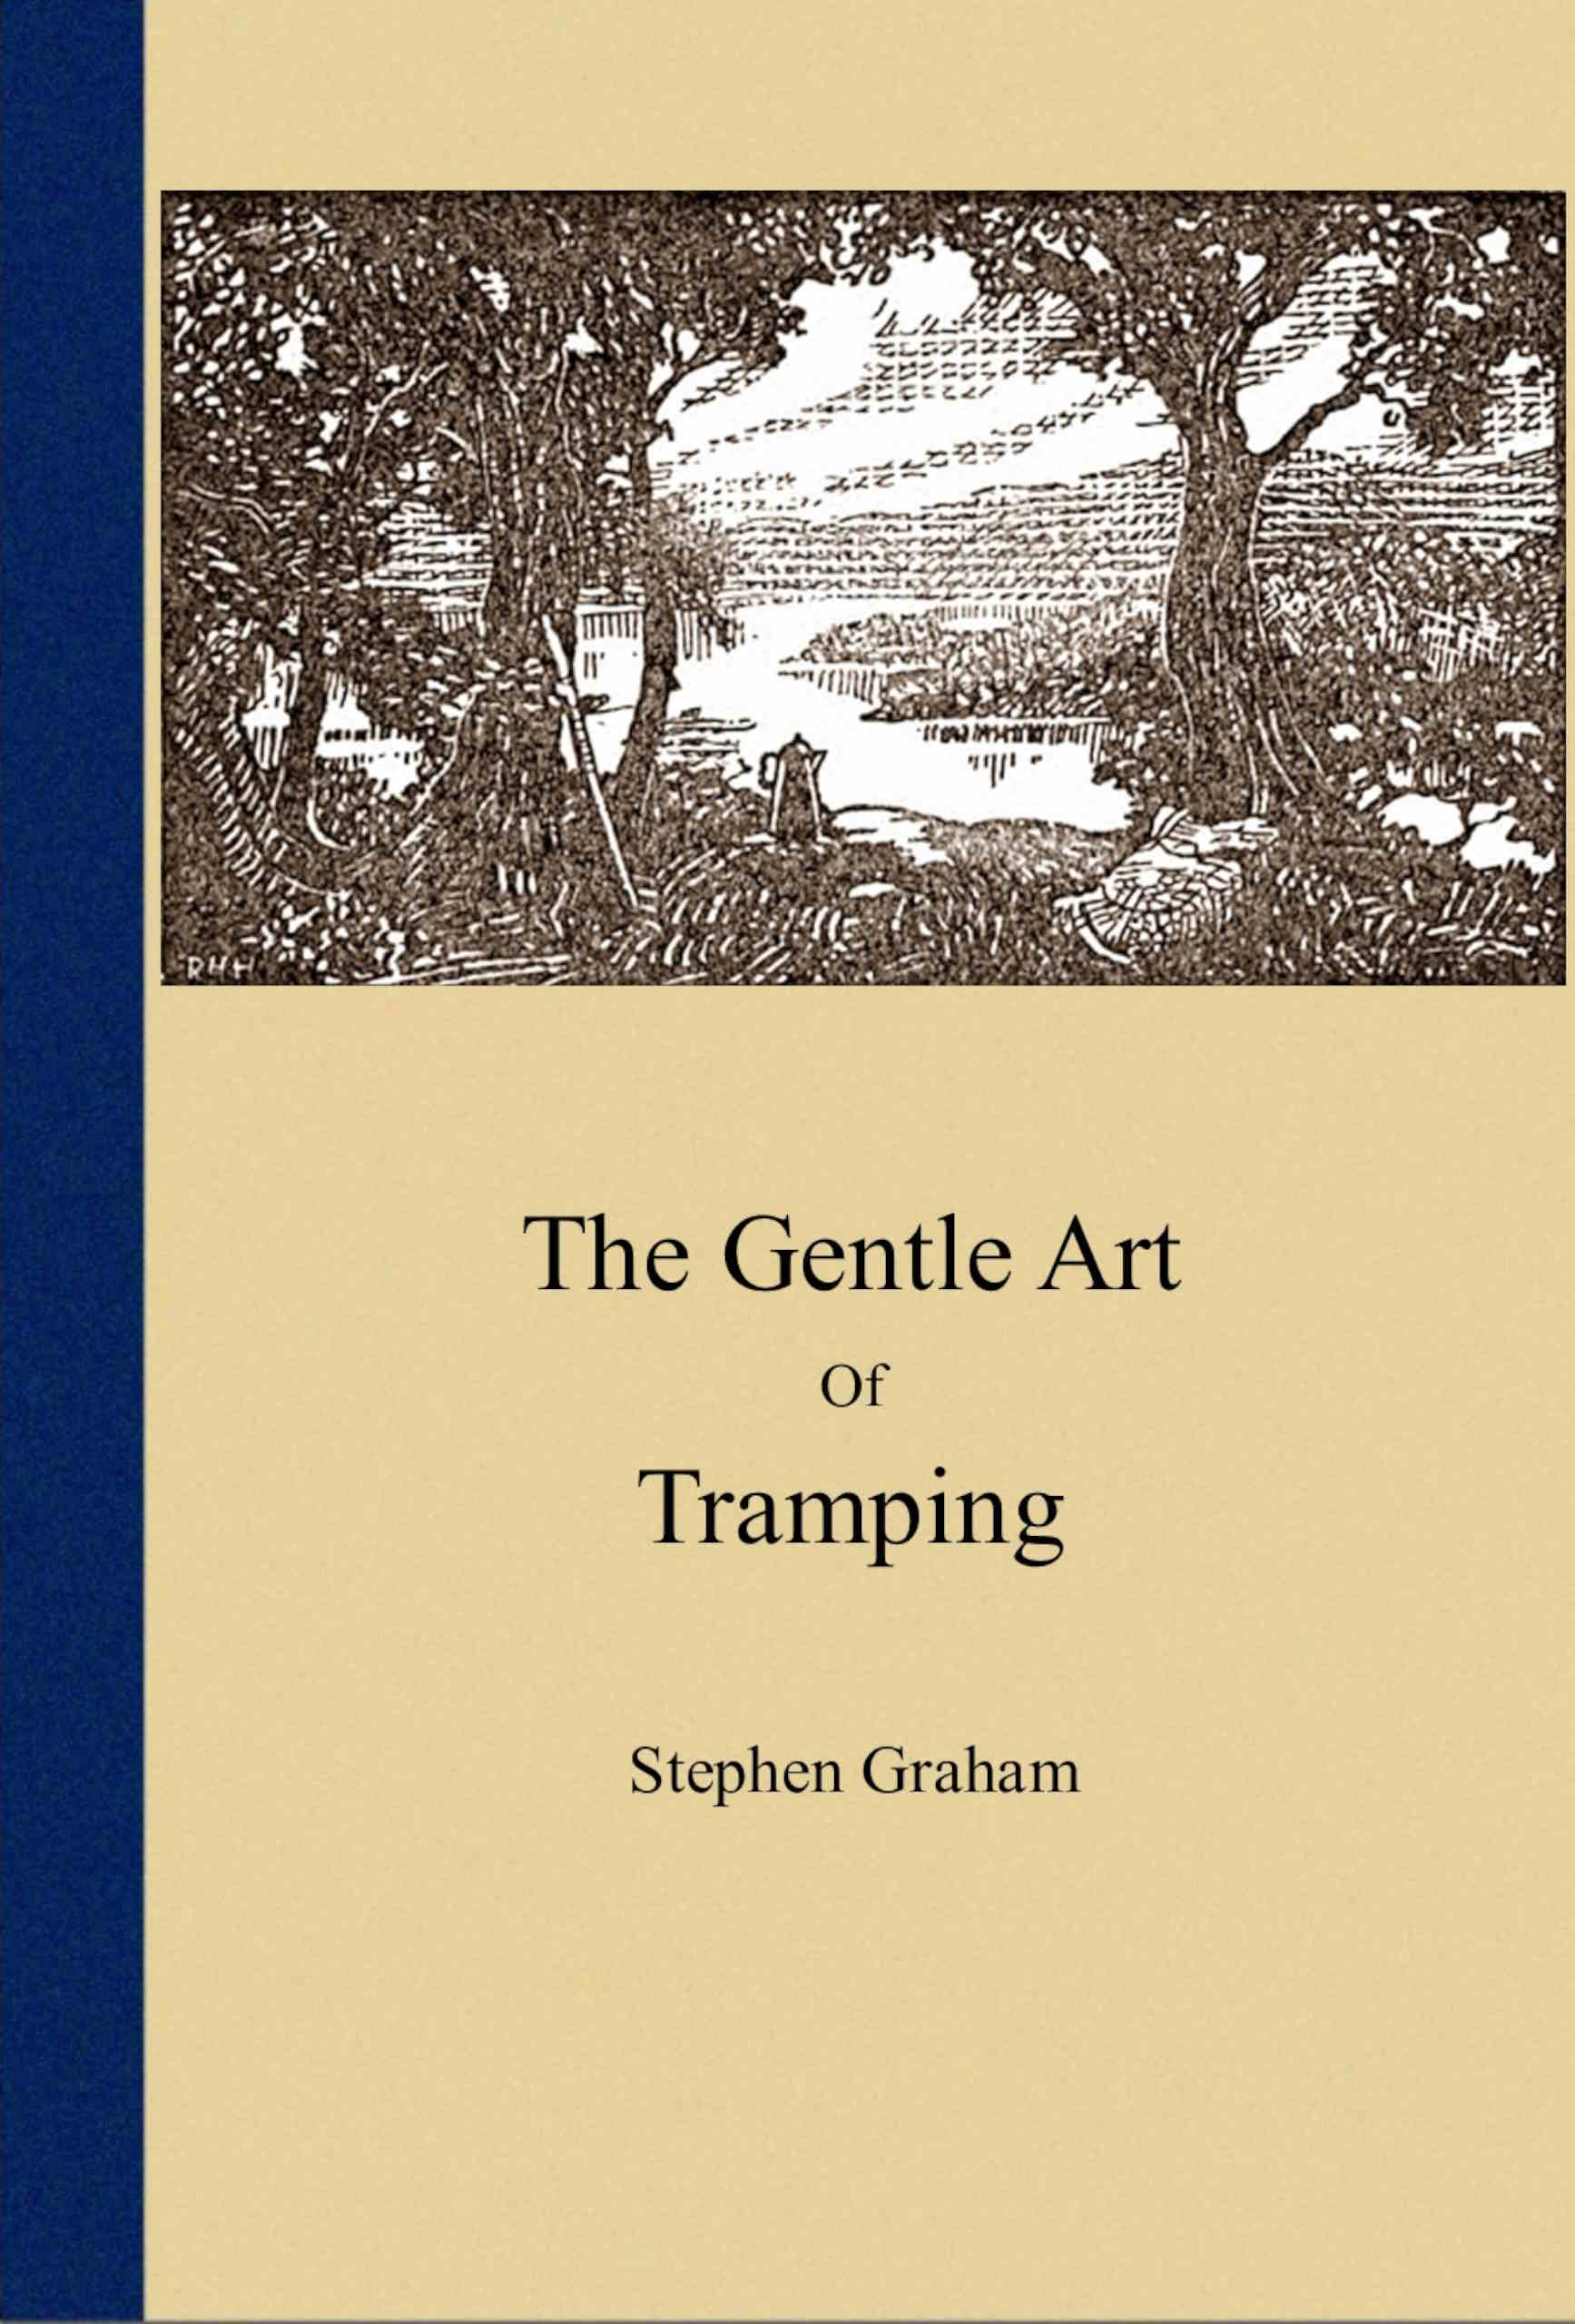 The gentle art of tramping